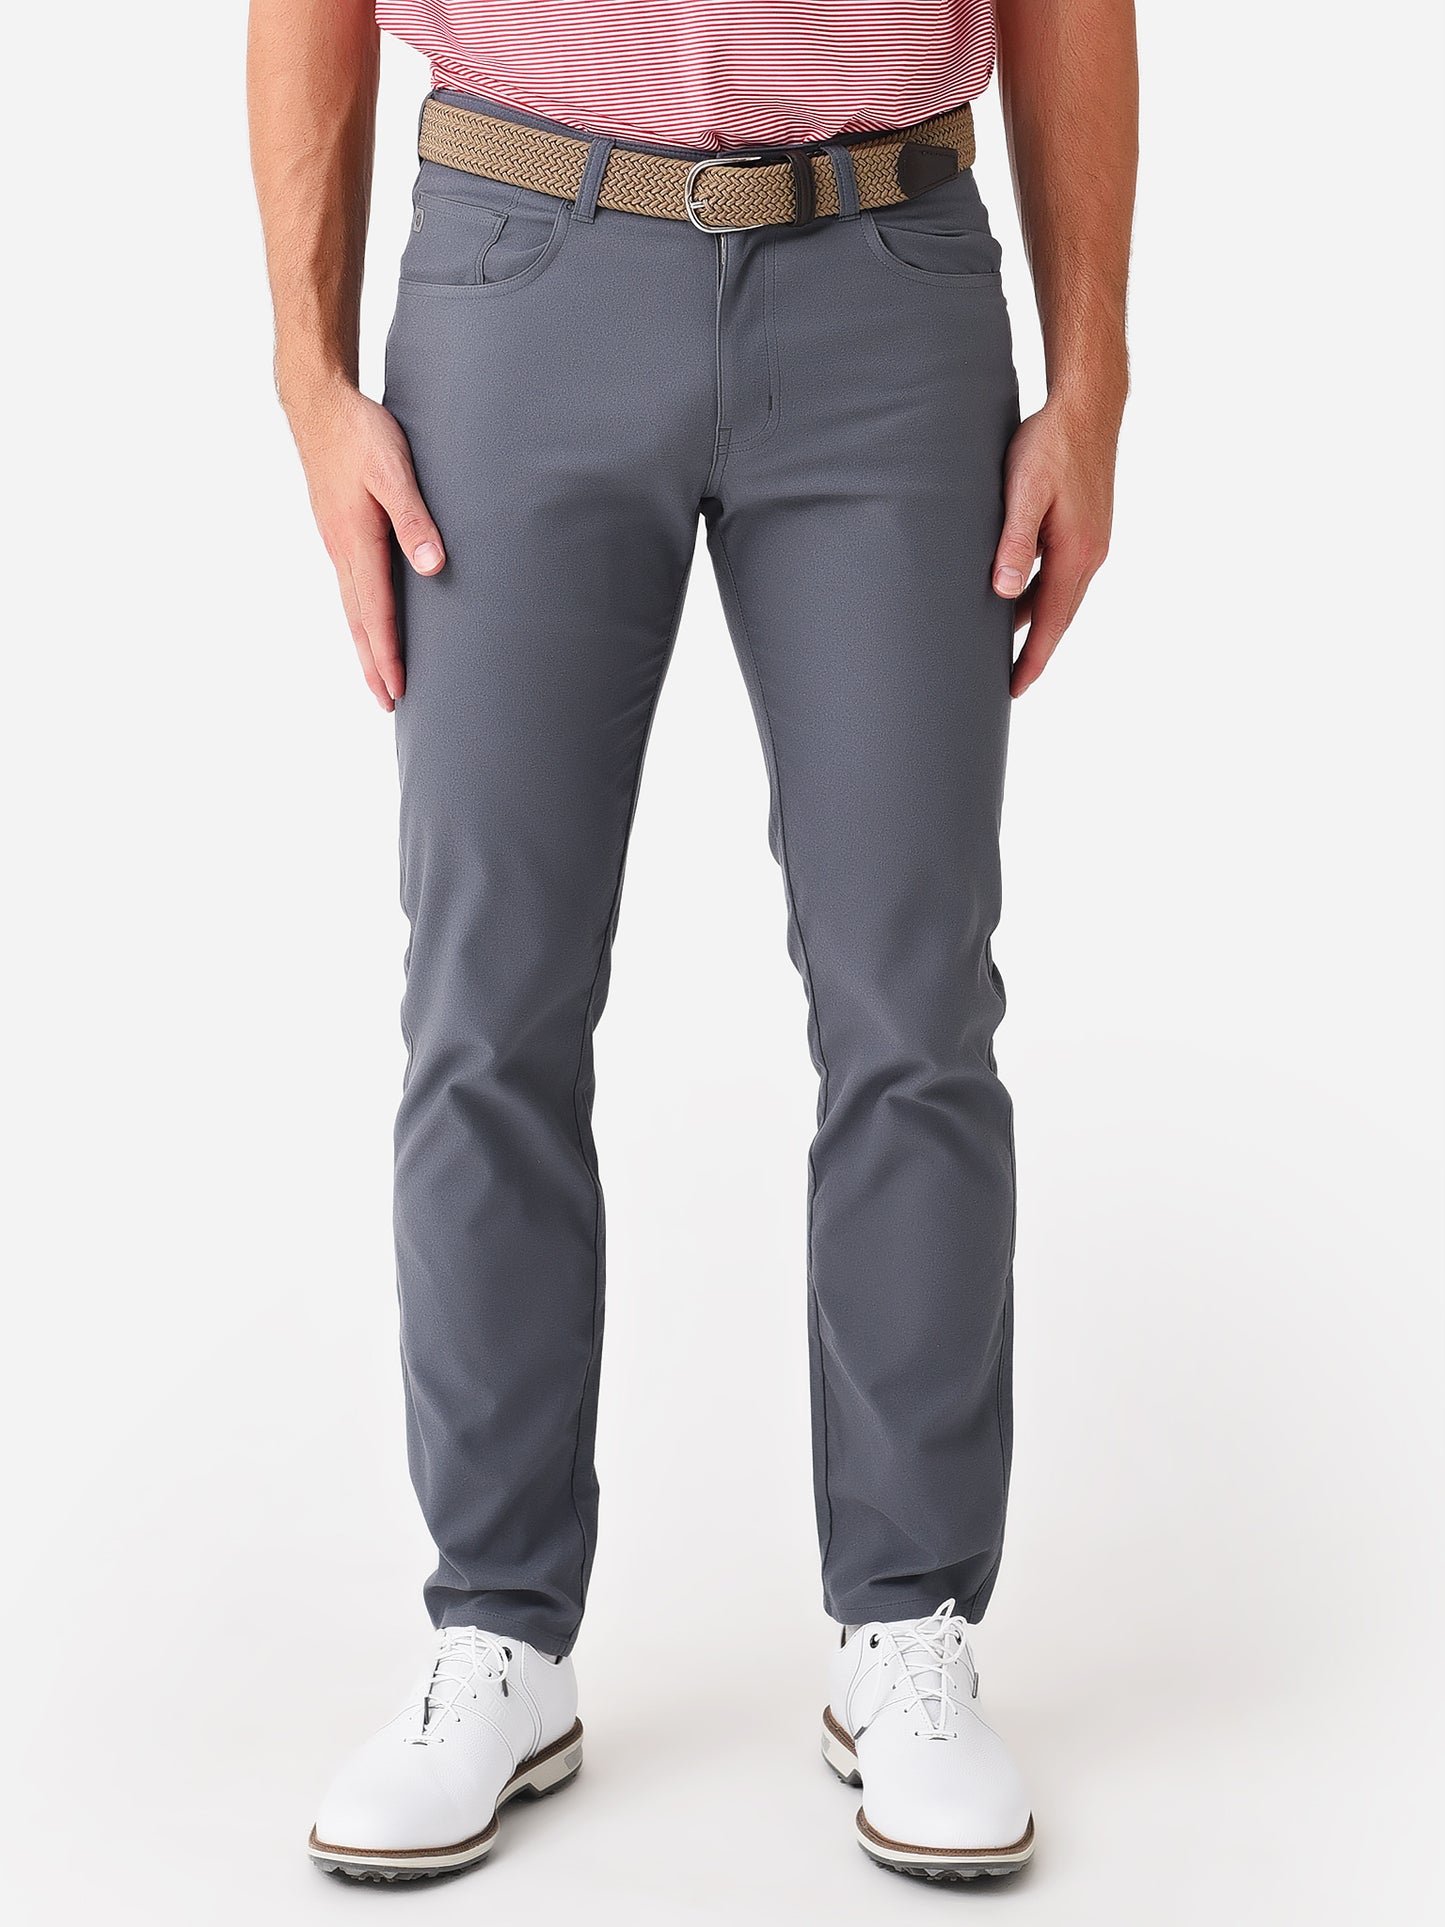 Peter Millar Crown Sport Flannel 5 Pocket Performance Pants Iron Grey 44x34  $158